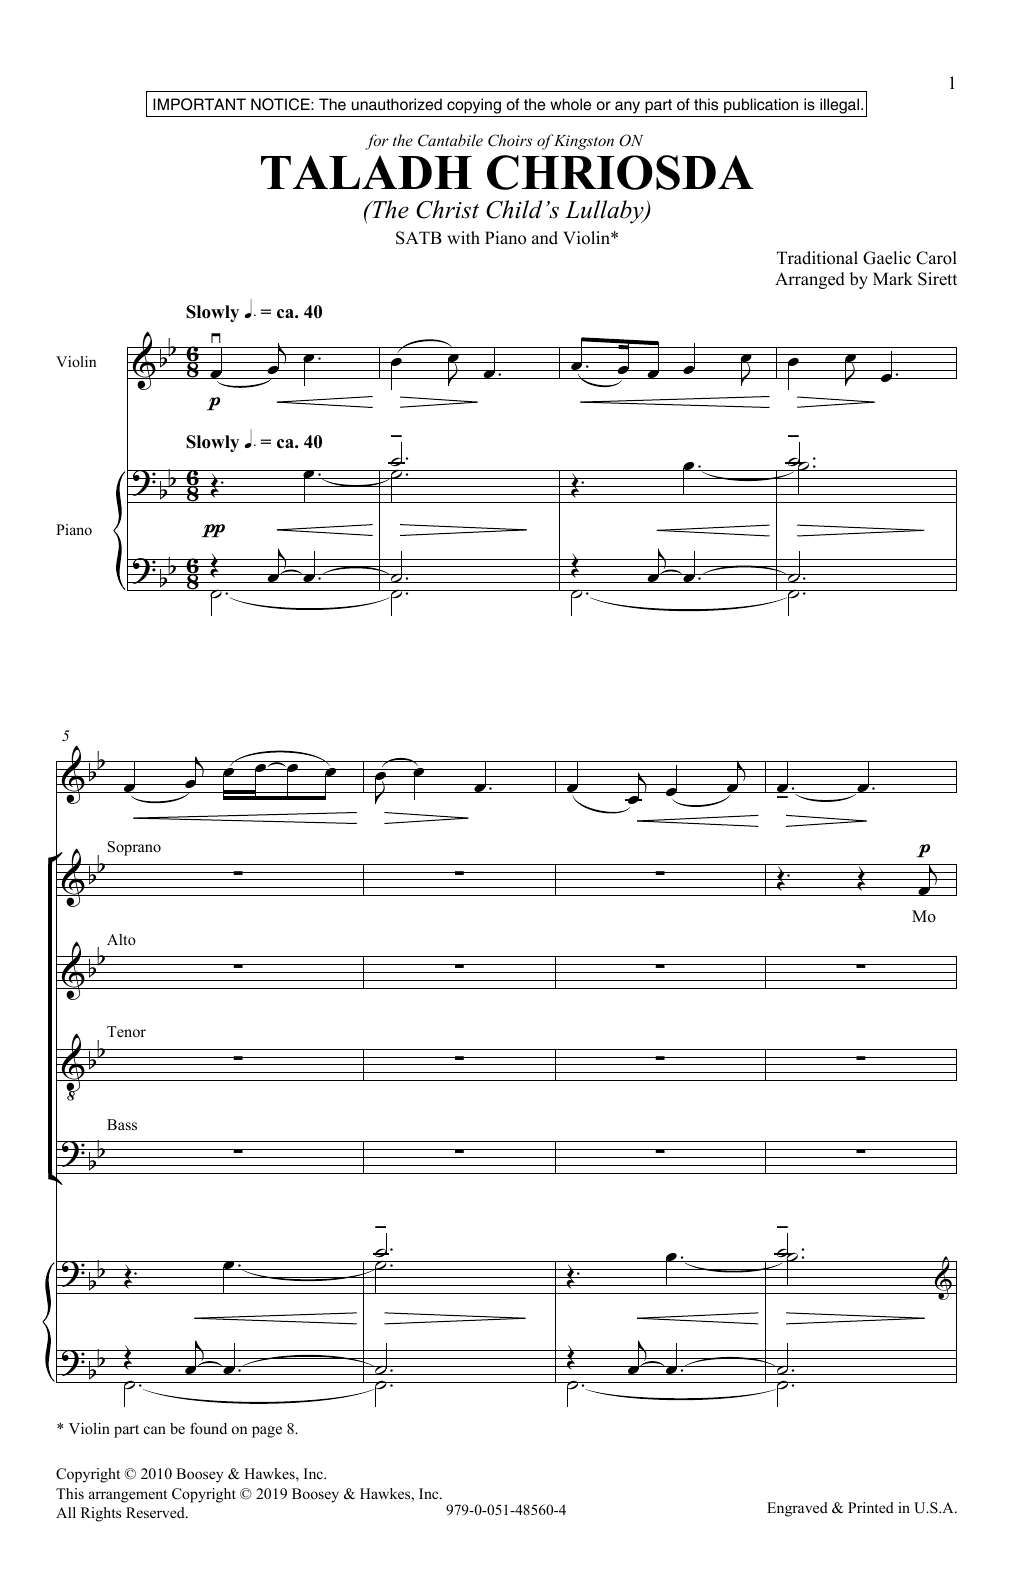 Traditional Gaelic Carol Taladh Chriosda (arr. Mark Sirett) sheet music notes and chords arranged for SATB Choir